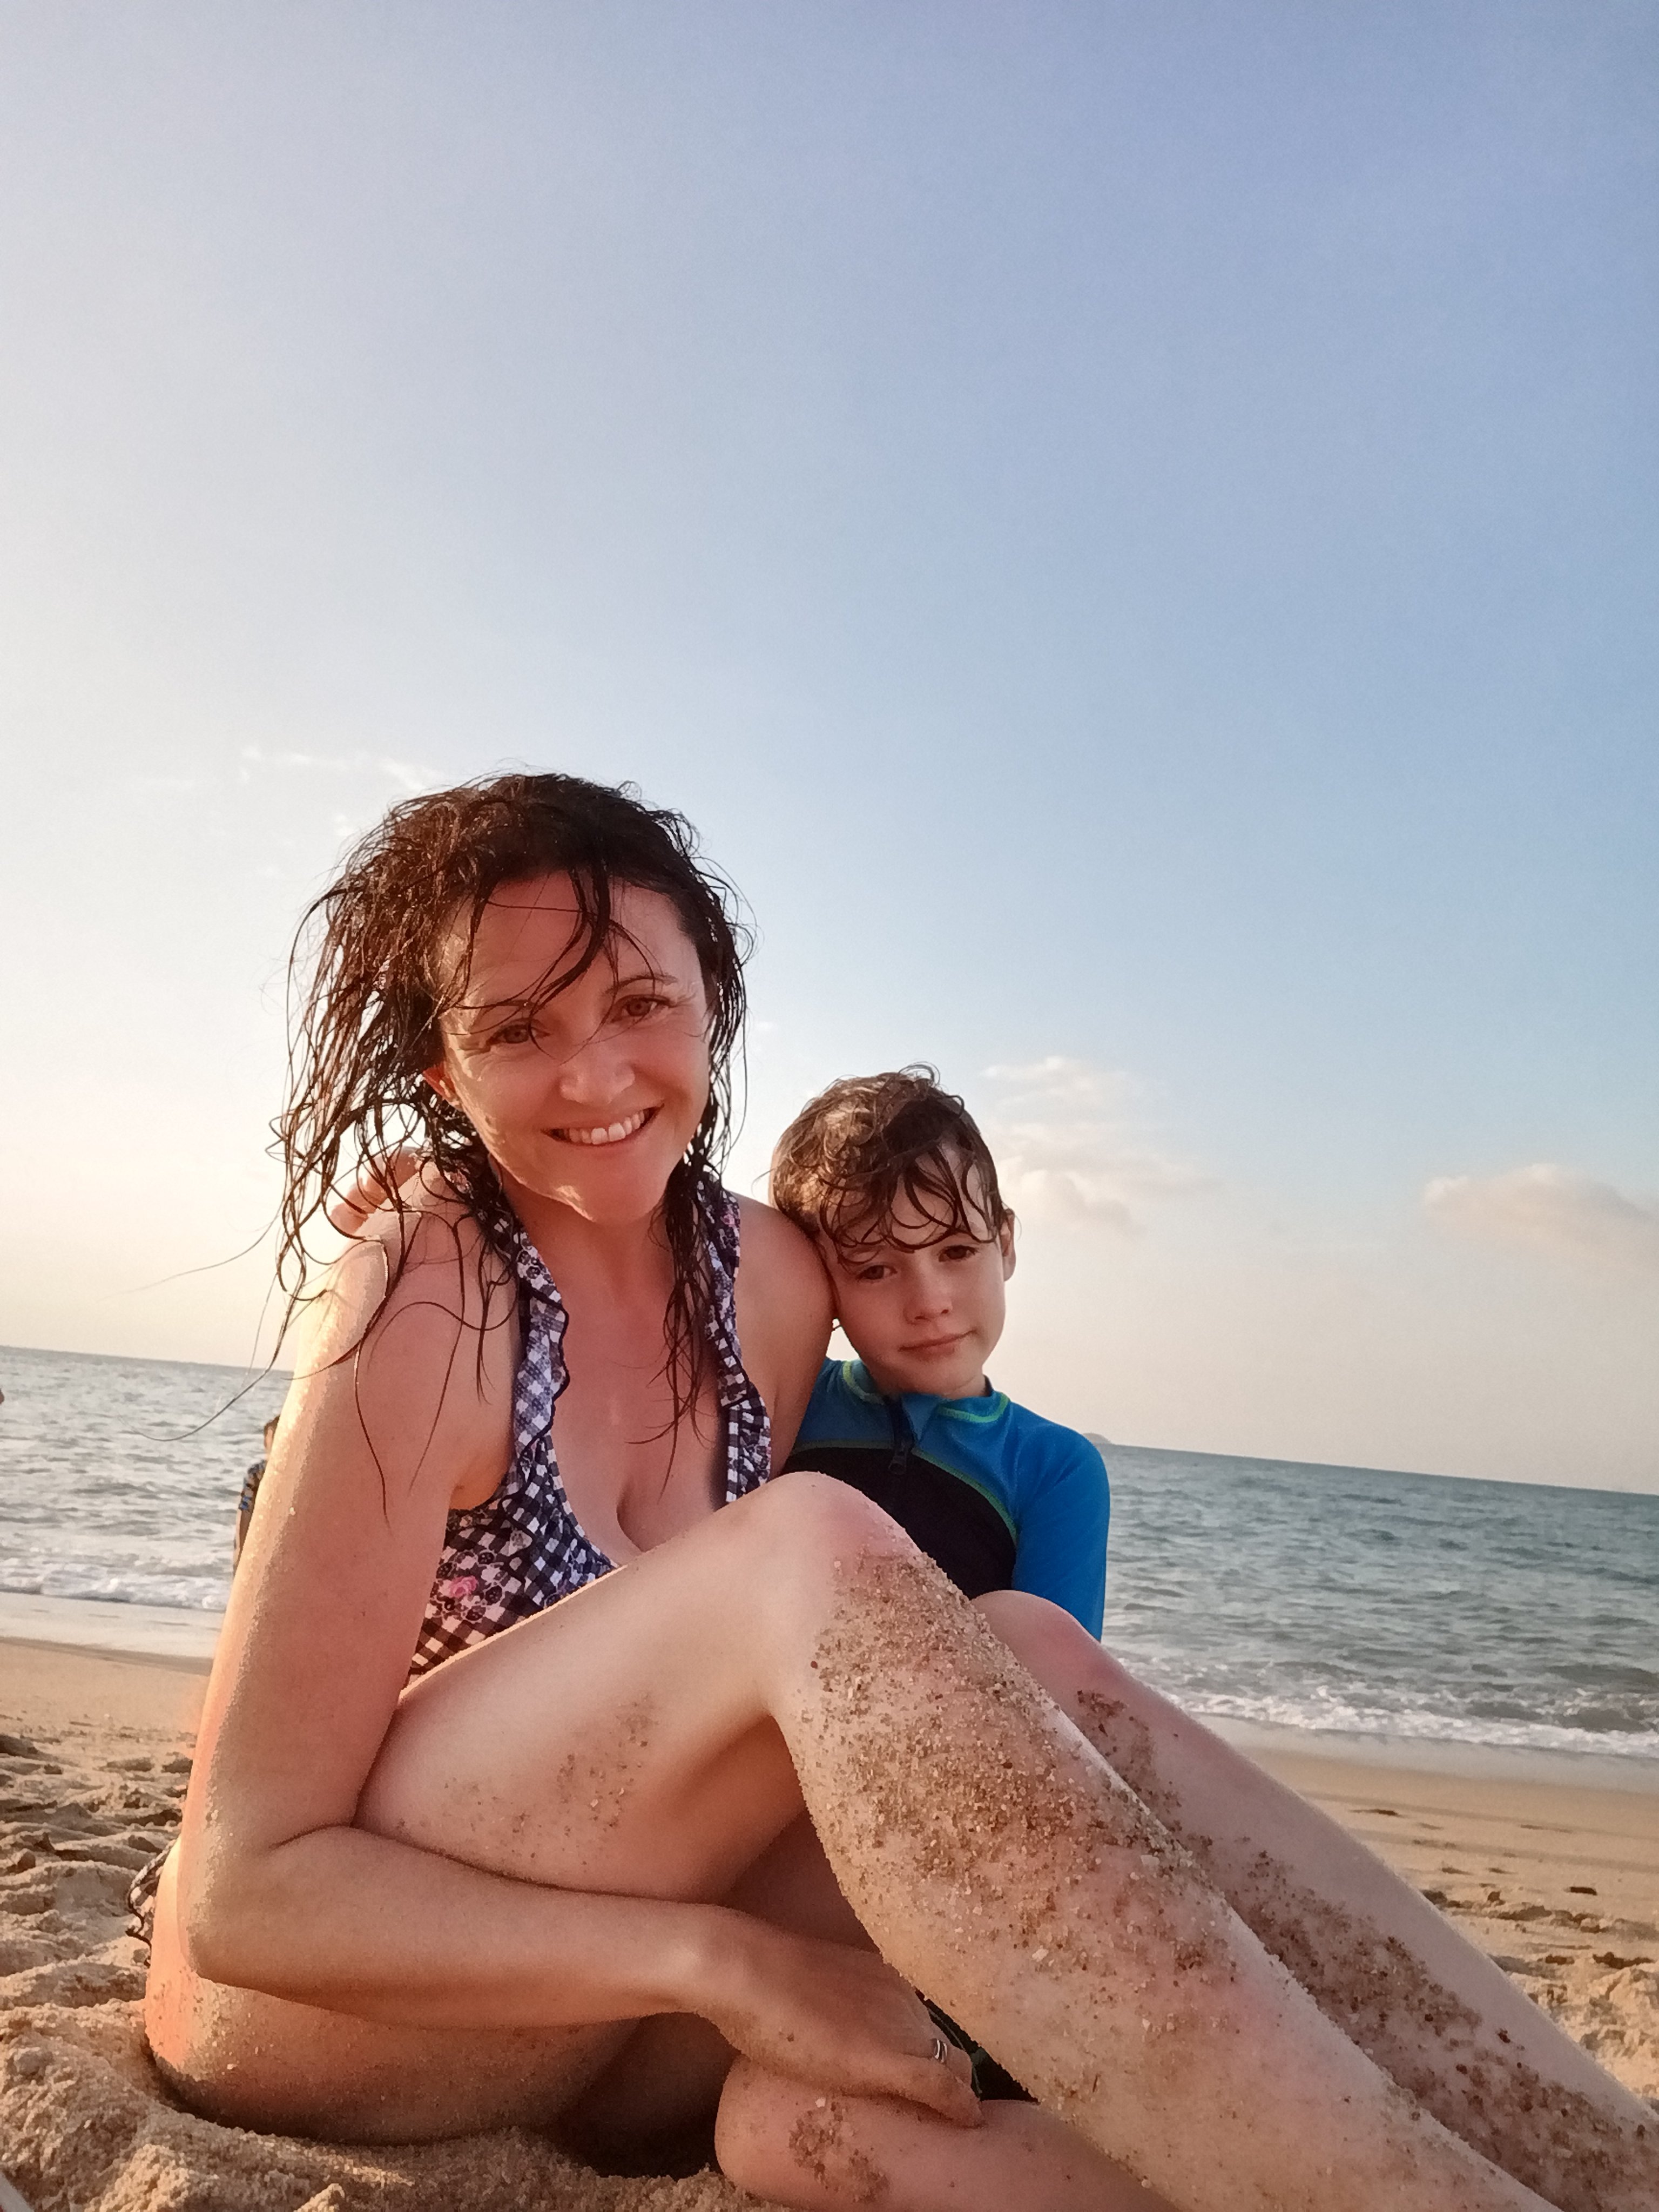 Meliosa Gormley and her son Hugh relaxing on a beach in Sanya, on Hainan island, China. Photo: Courtesy of Meliosa Gormley